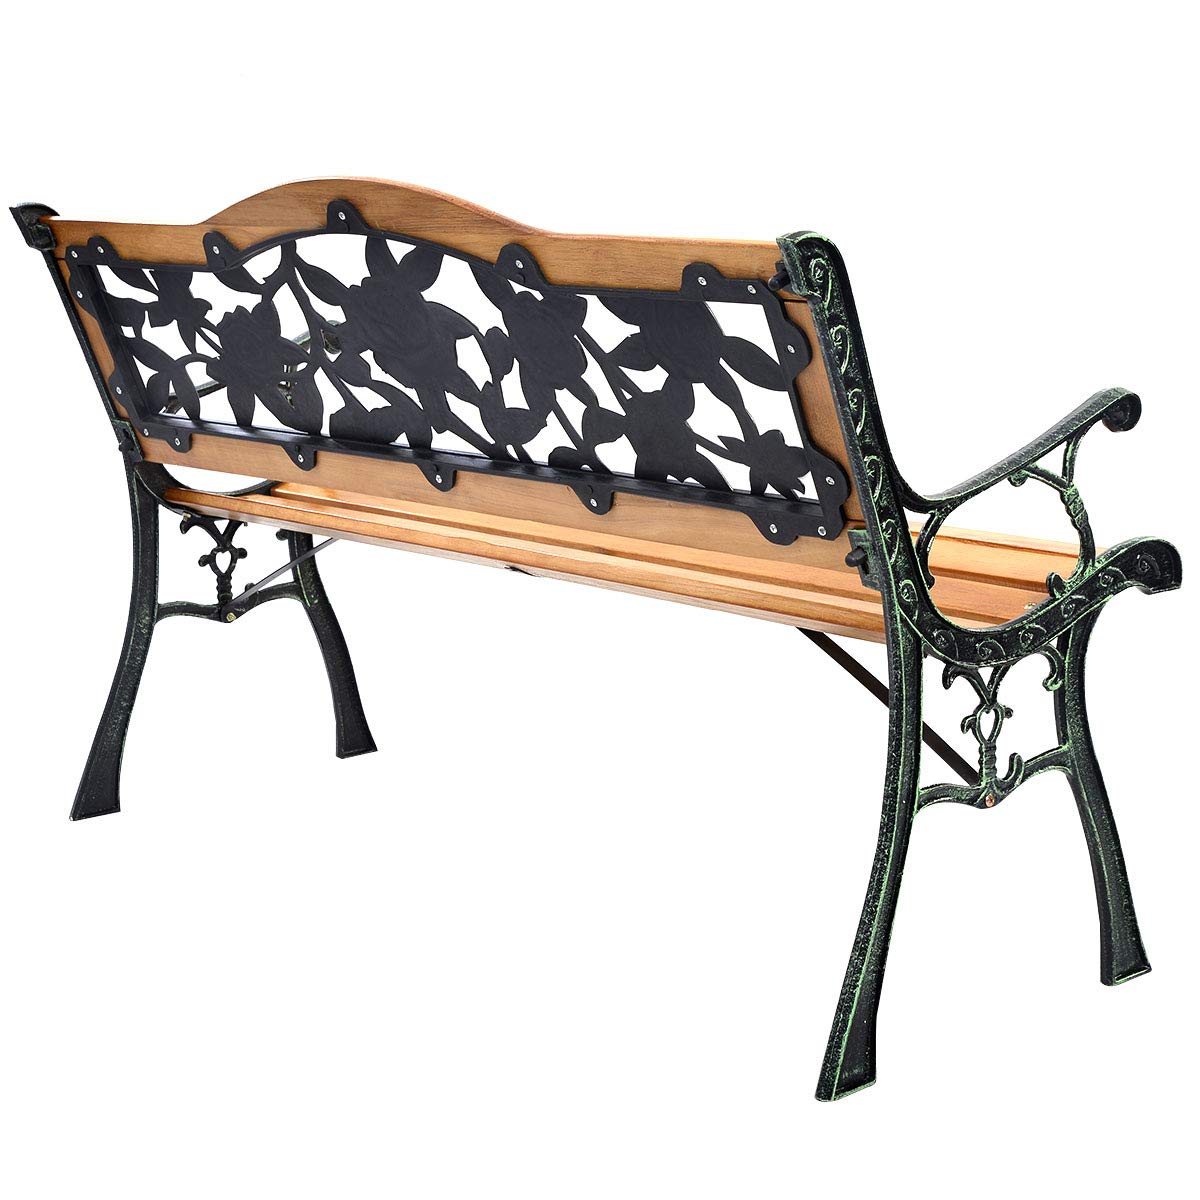 Giantex 50'' Patio Park Garden Bench, Weather Proof Porch Path Chair